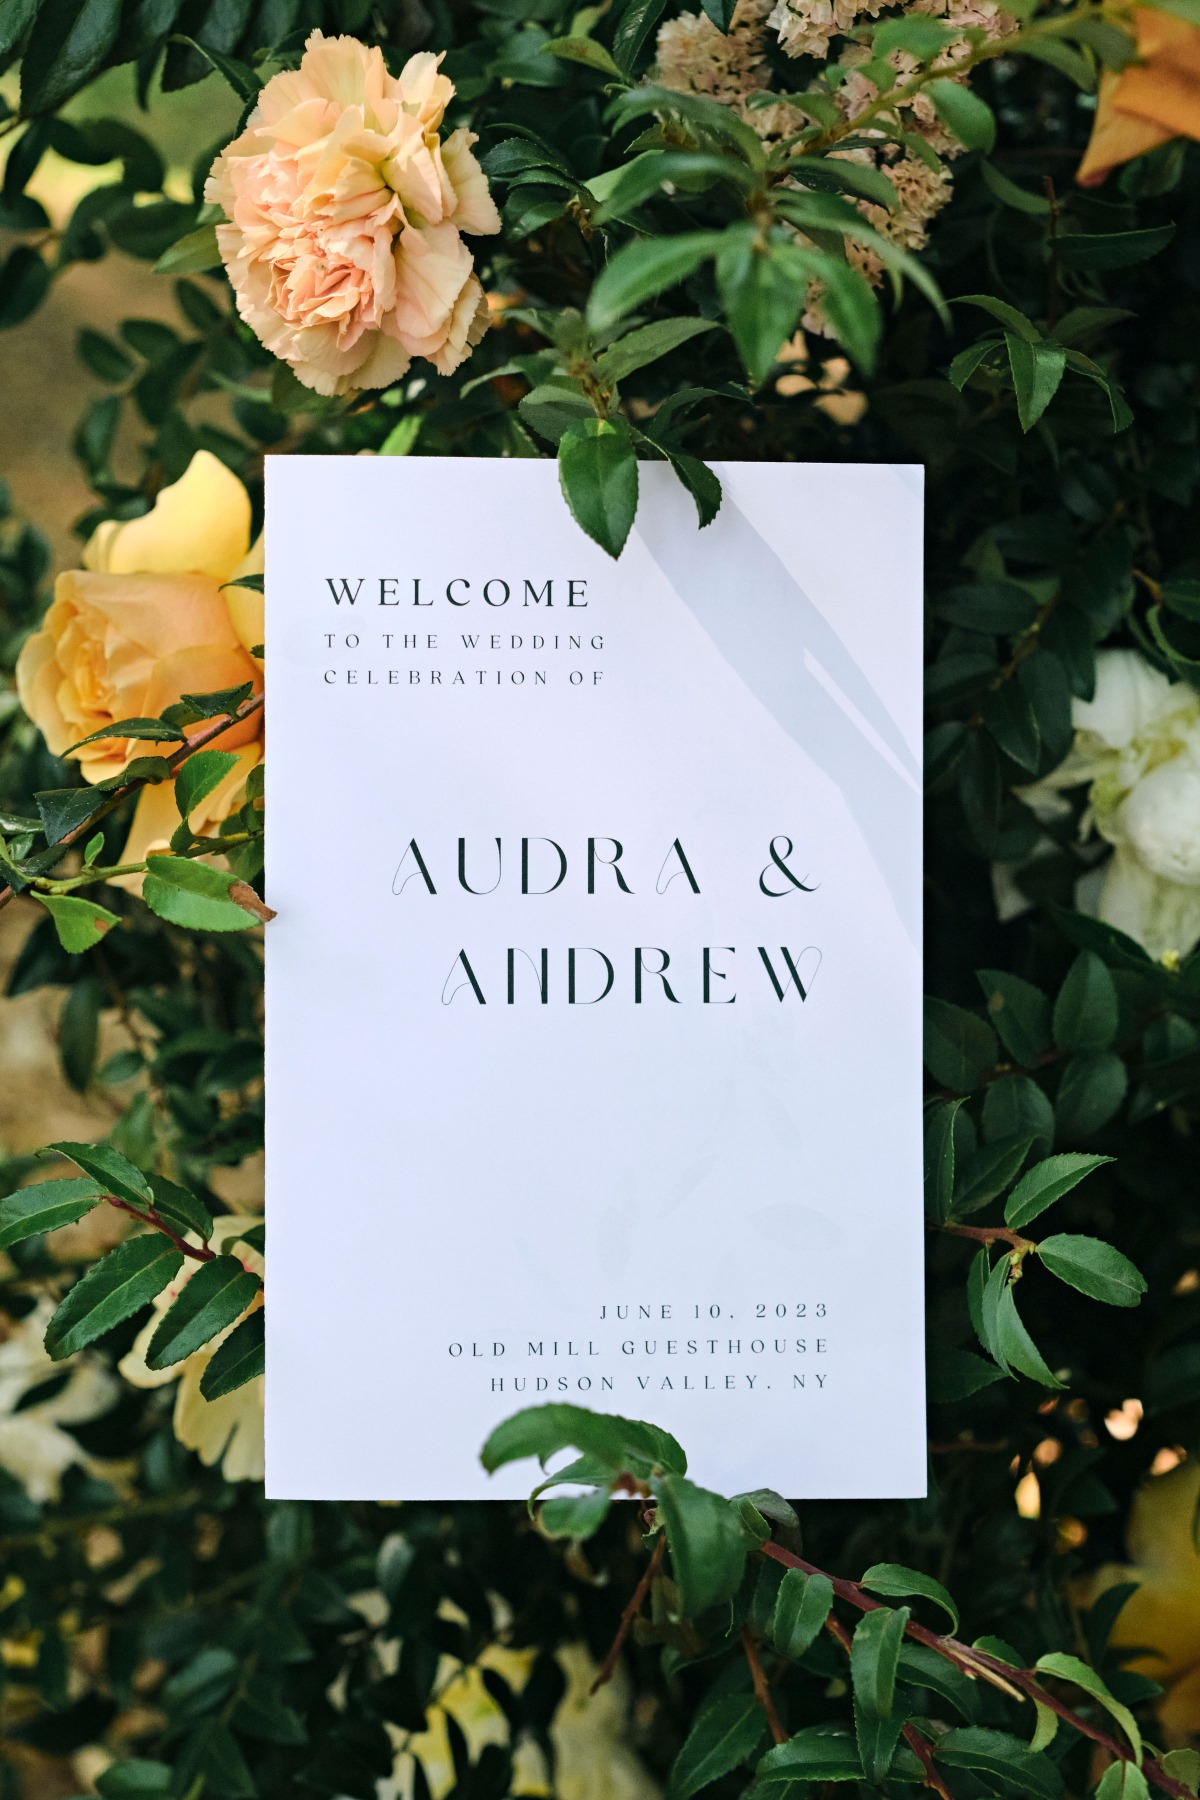 Modern black and white wedding invitations with minimalist design